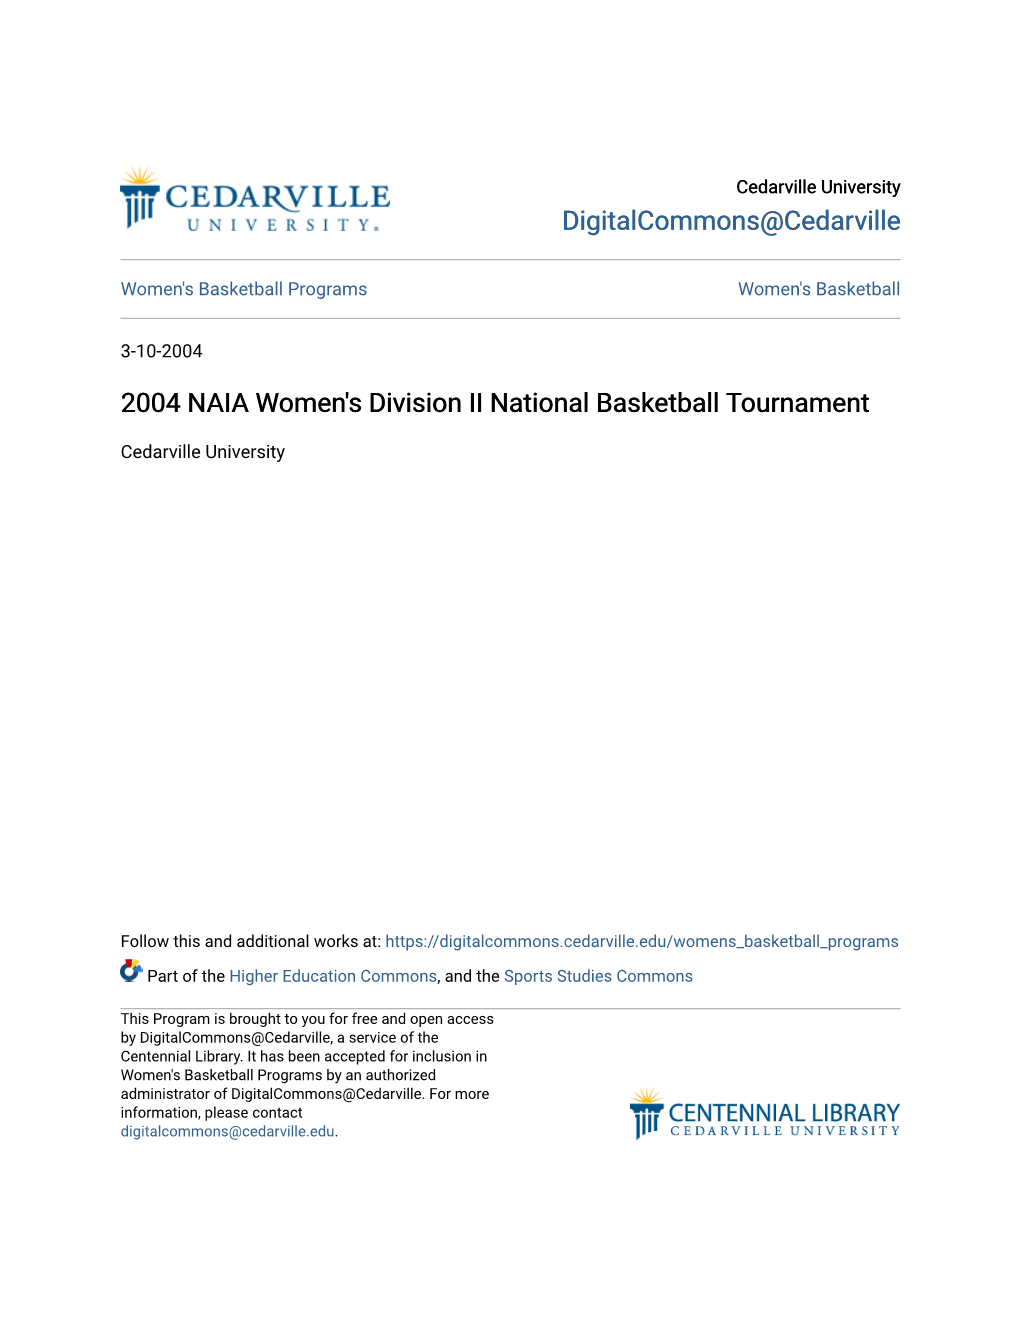 2004 NAIA Women's Division II National Basketball Tournament